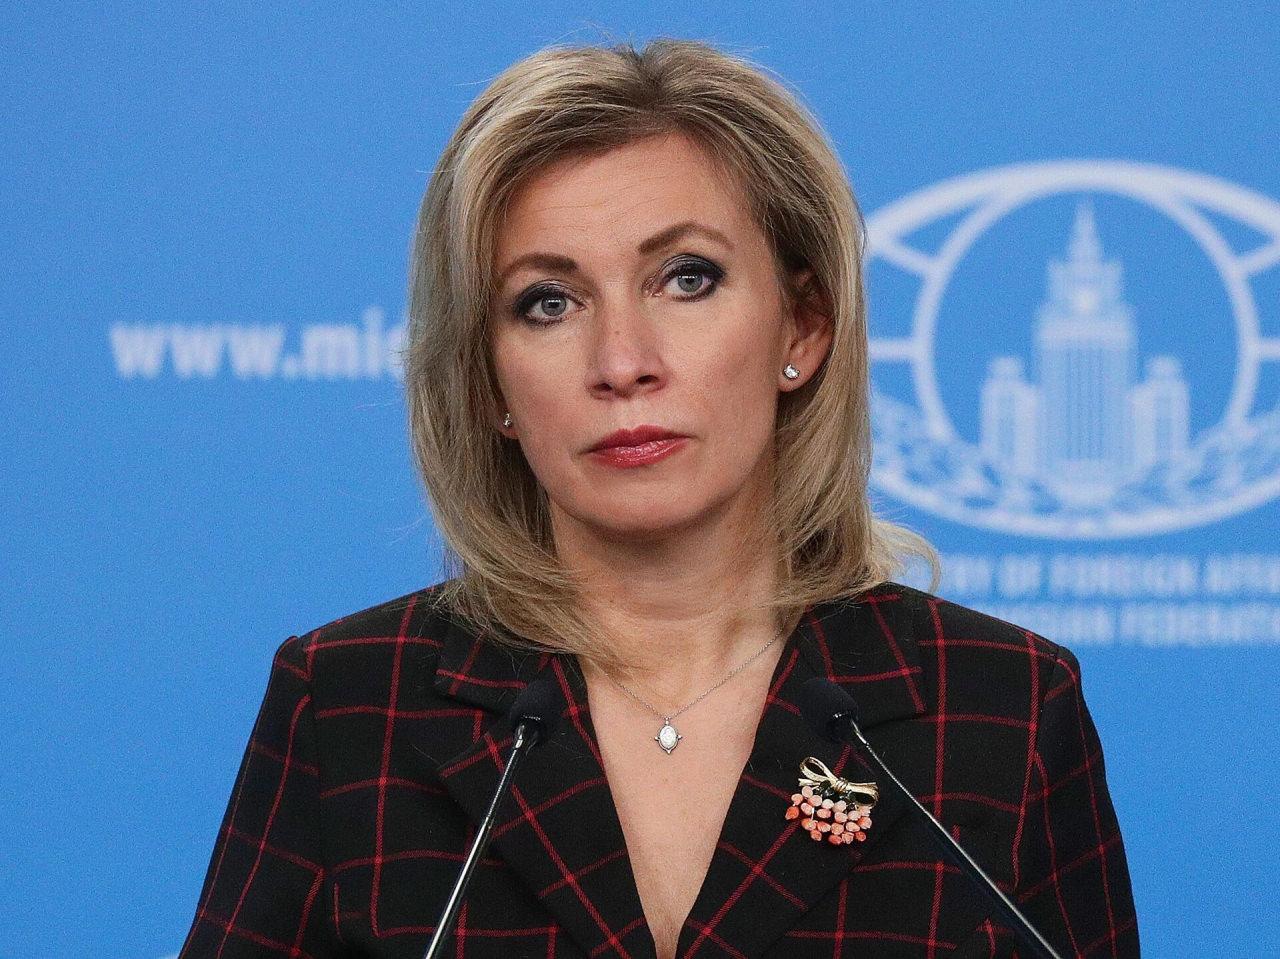 Rusya Dışişleri Bakanlığı Sözcüsü Mariya Zaharova